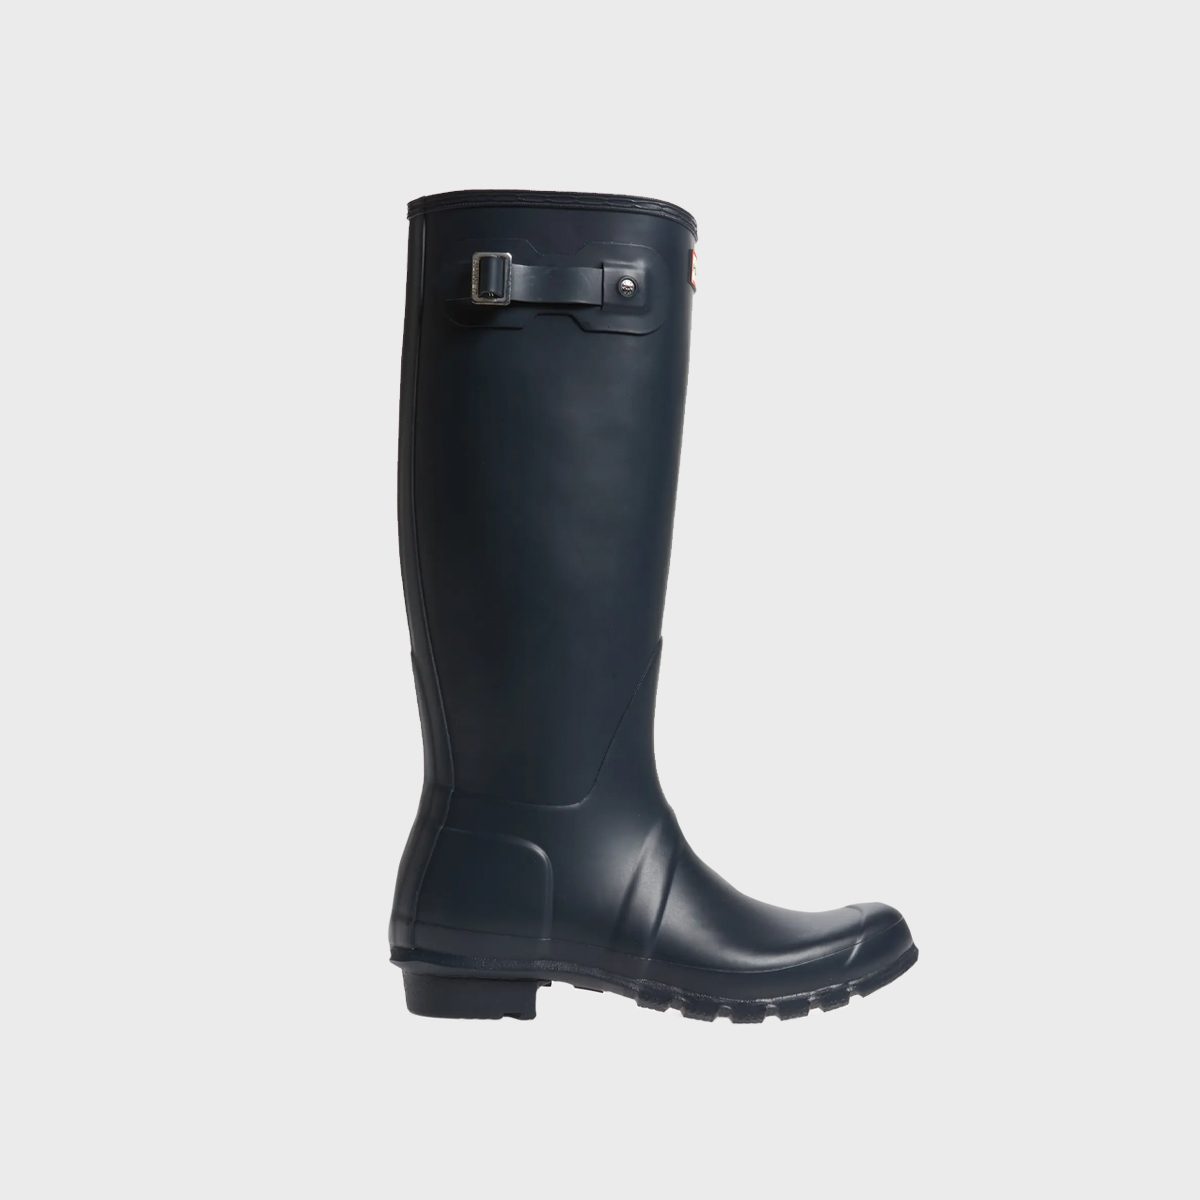 Ladies WIDE Calf Wellies Wellington Boots Plus Extra Comfort Memory Foam Insoles